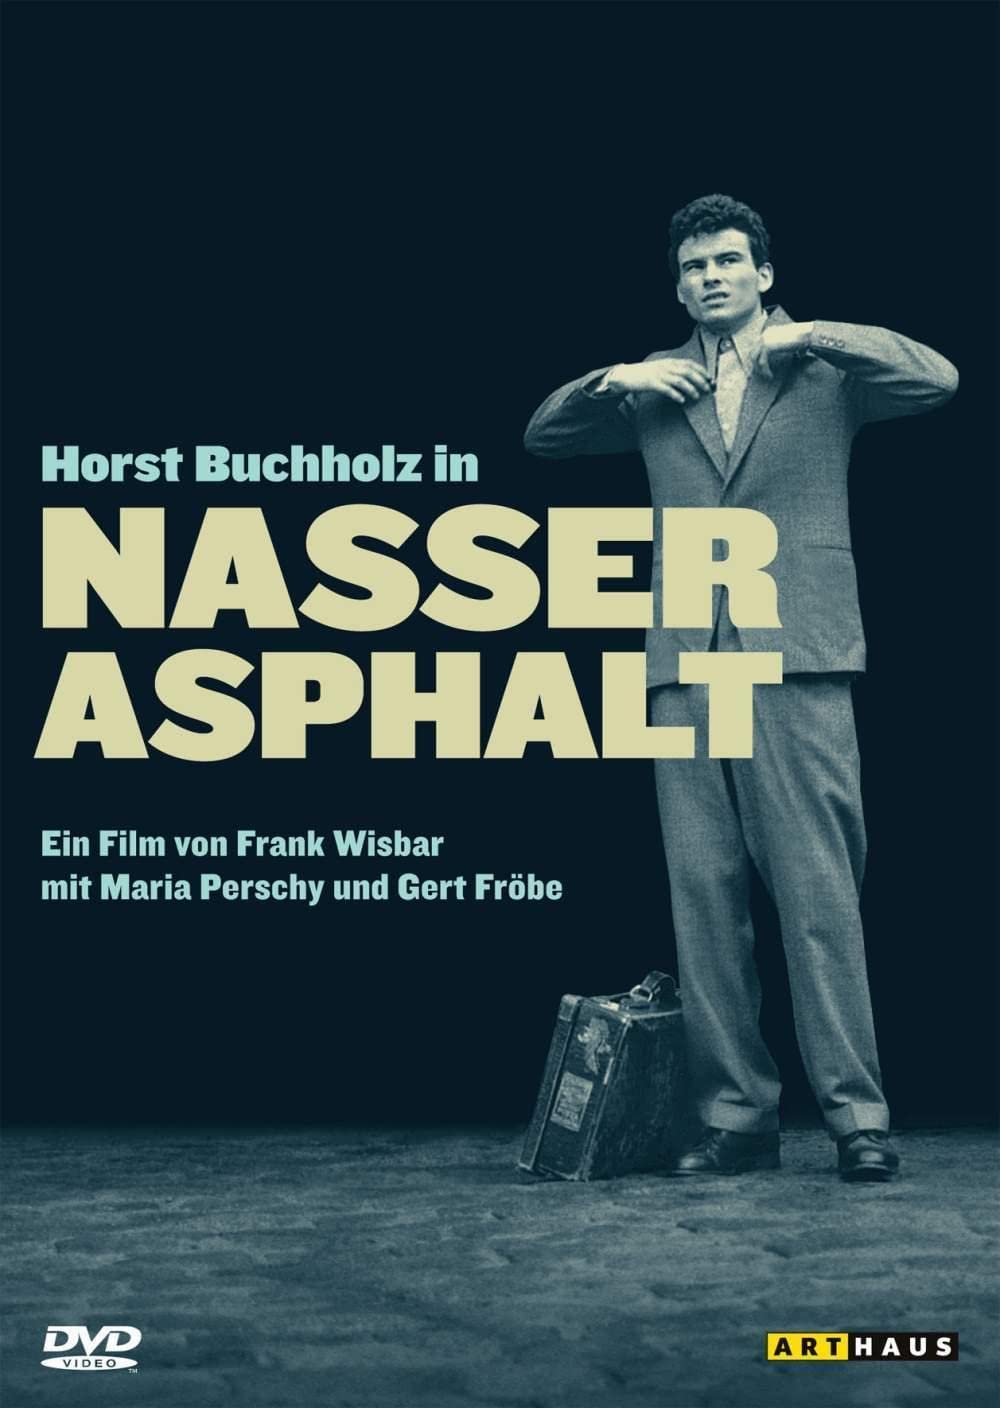 Filmbeschreibung zu Nasser Asphalt